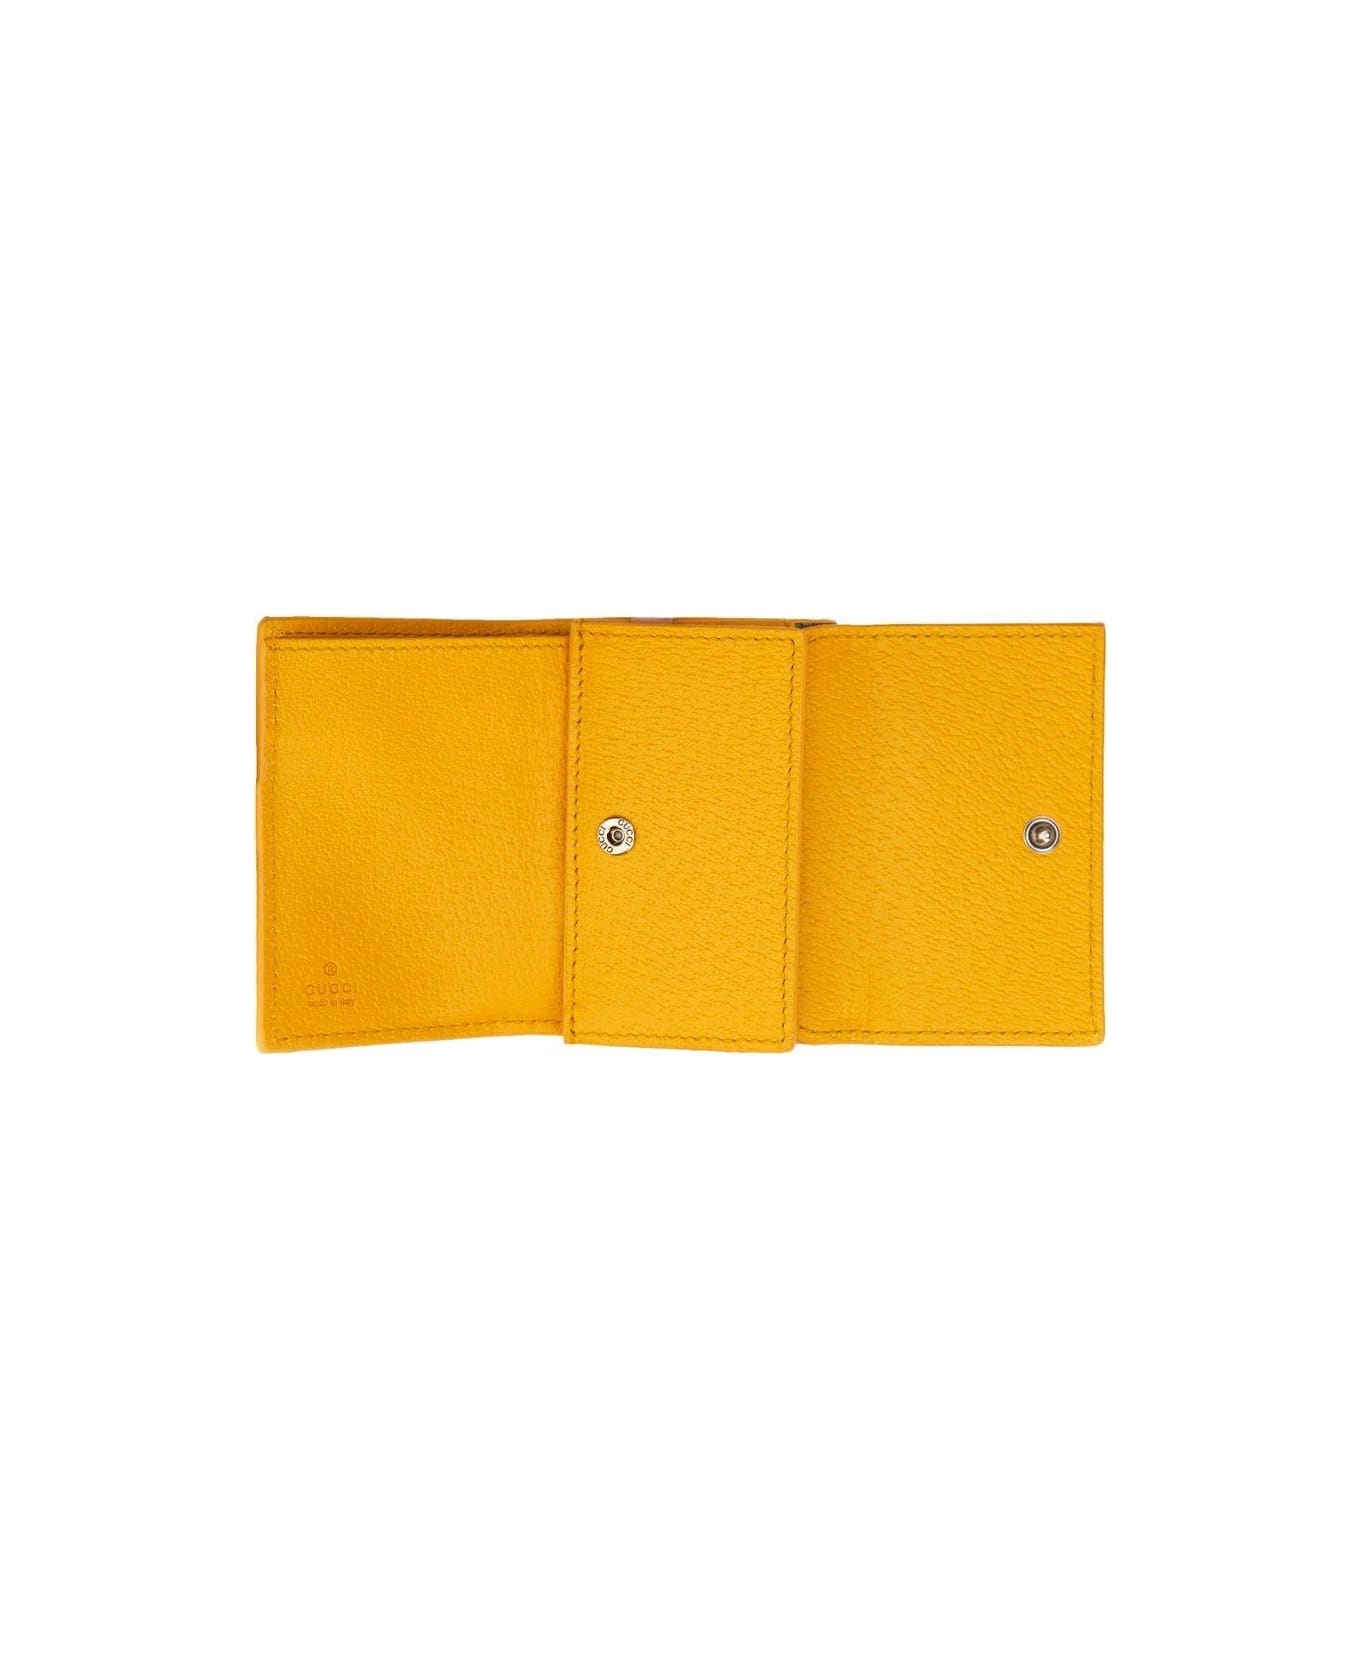 Gucci Gg Detailed Mini Wallet - Crop